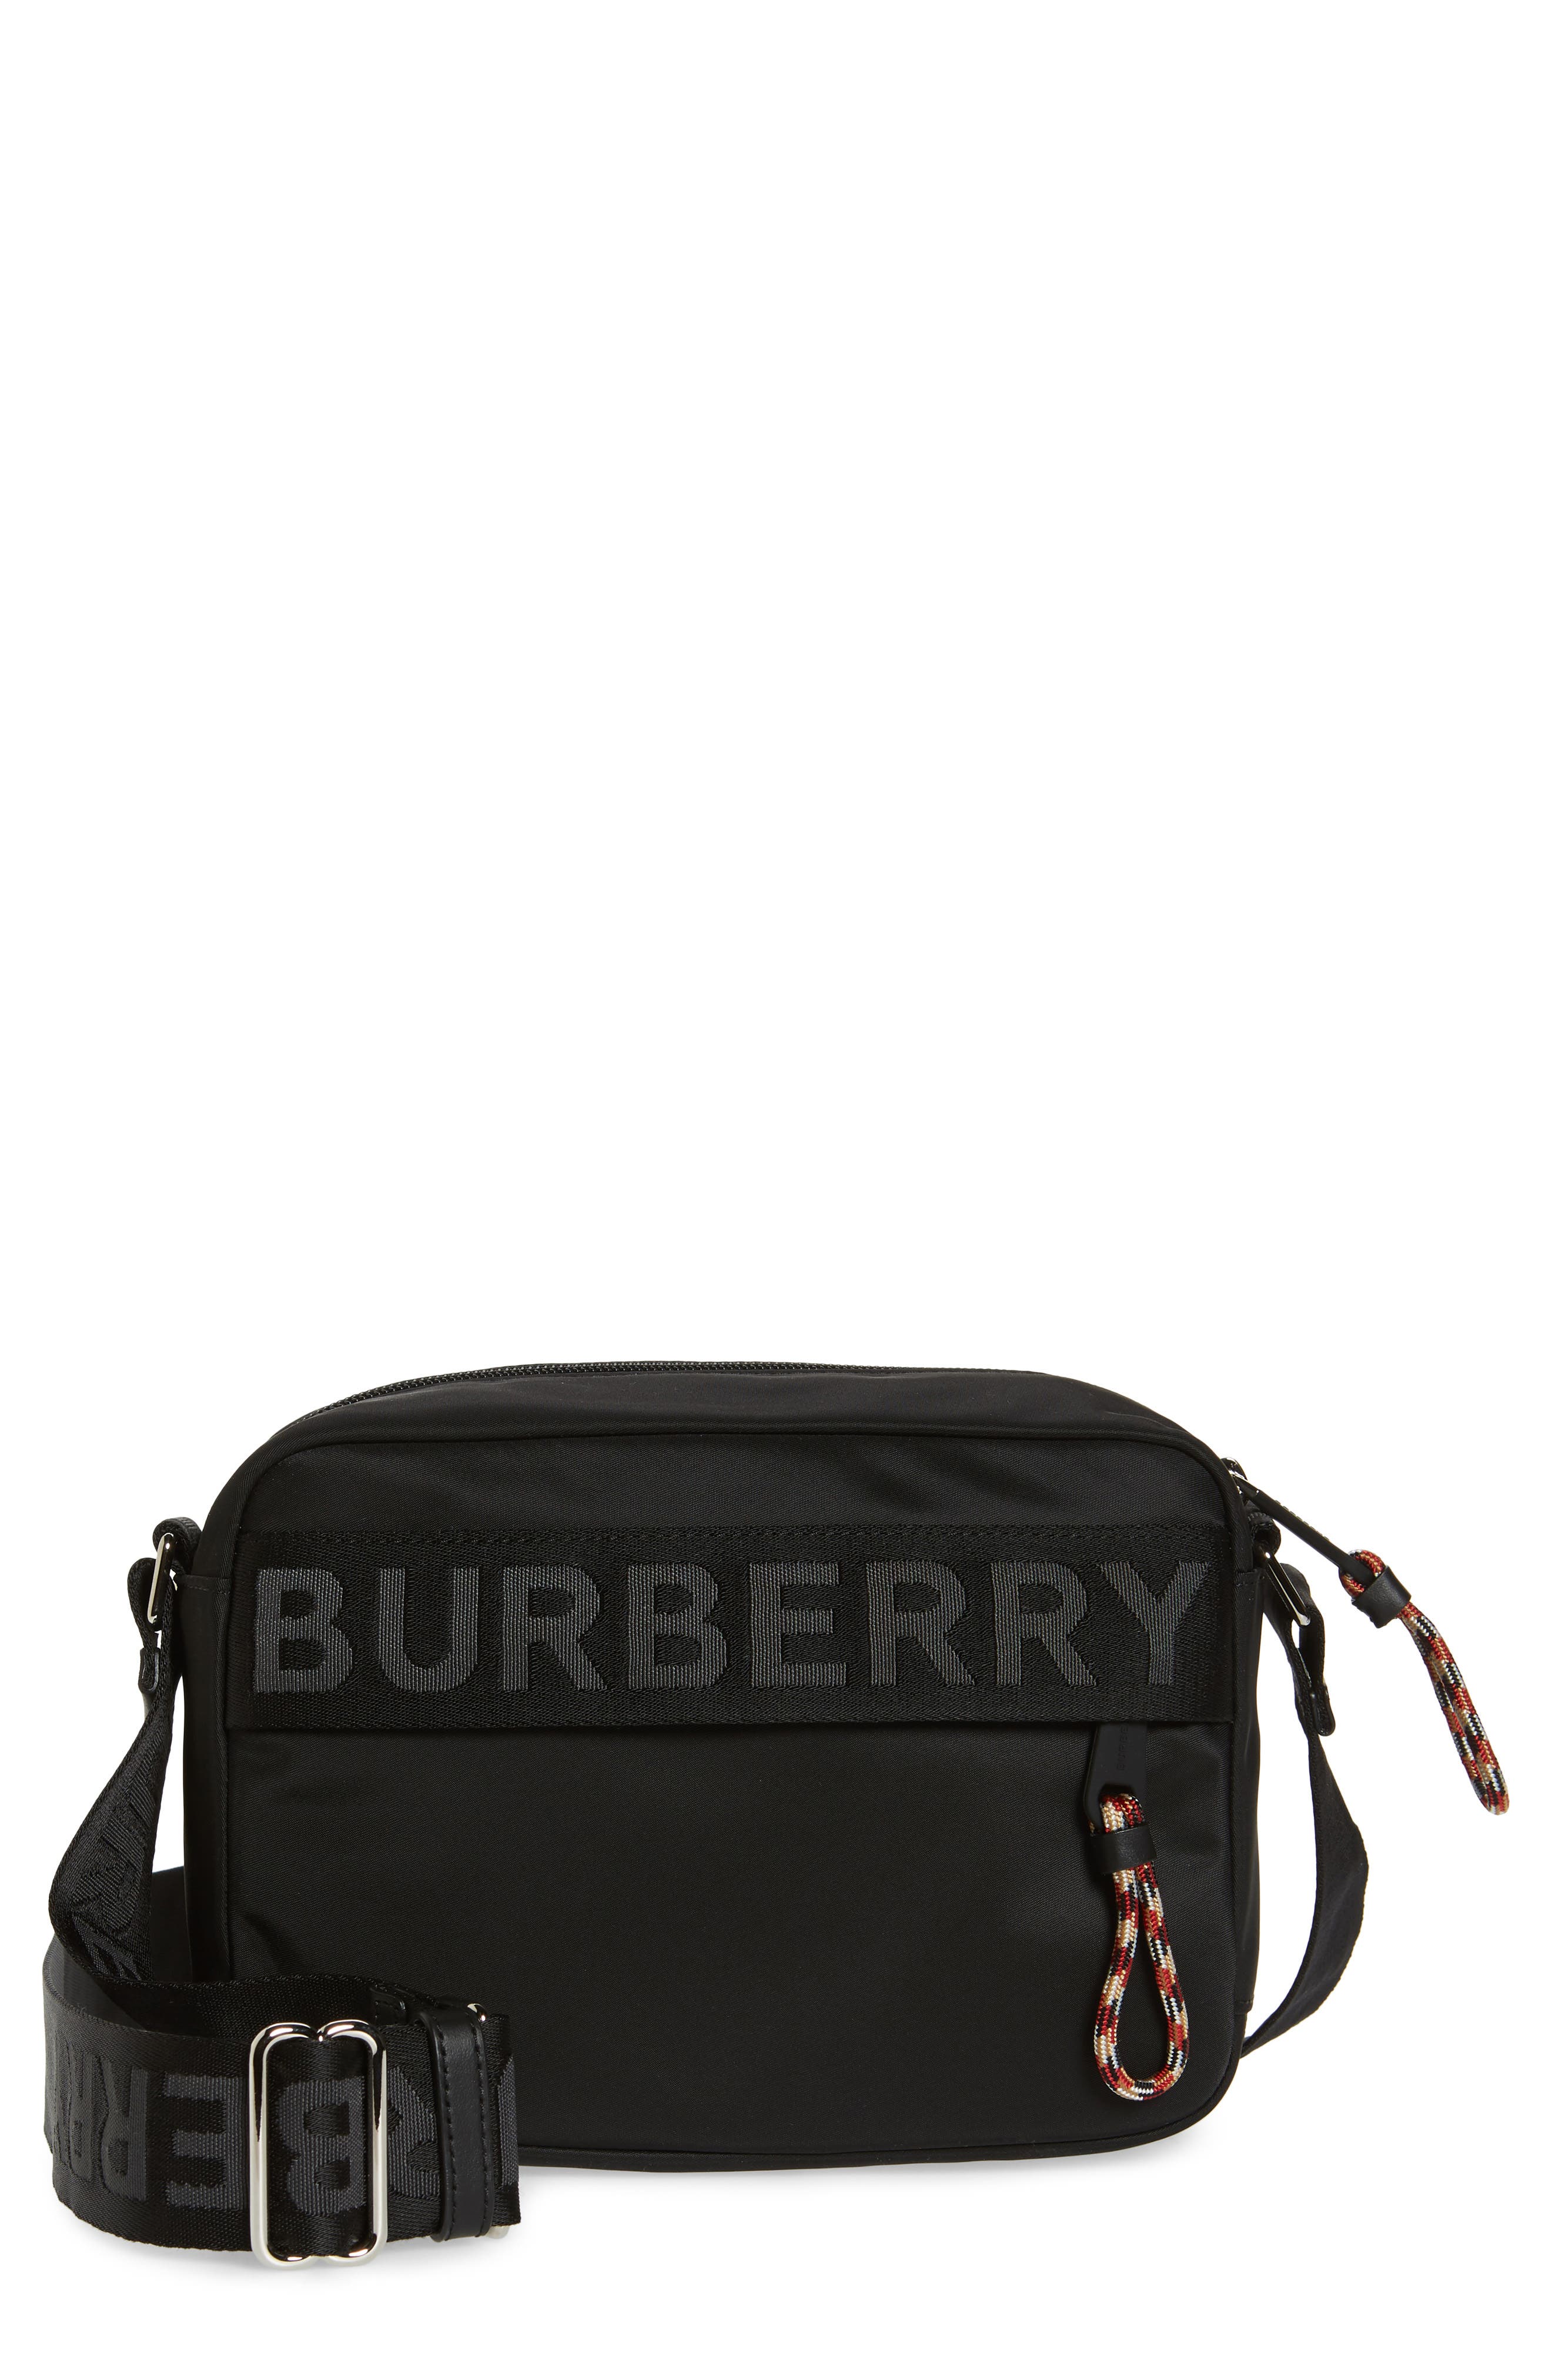 burberry nylon shoulder bag